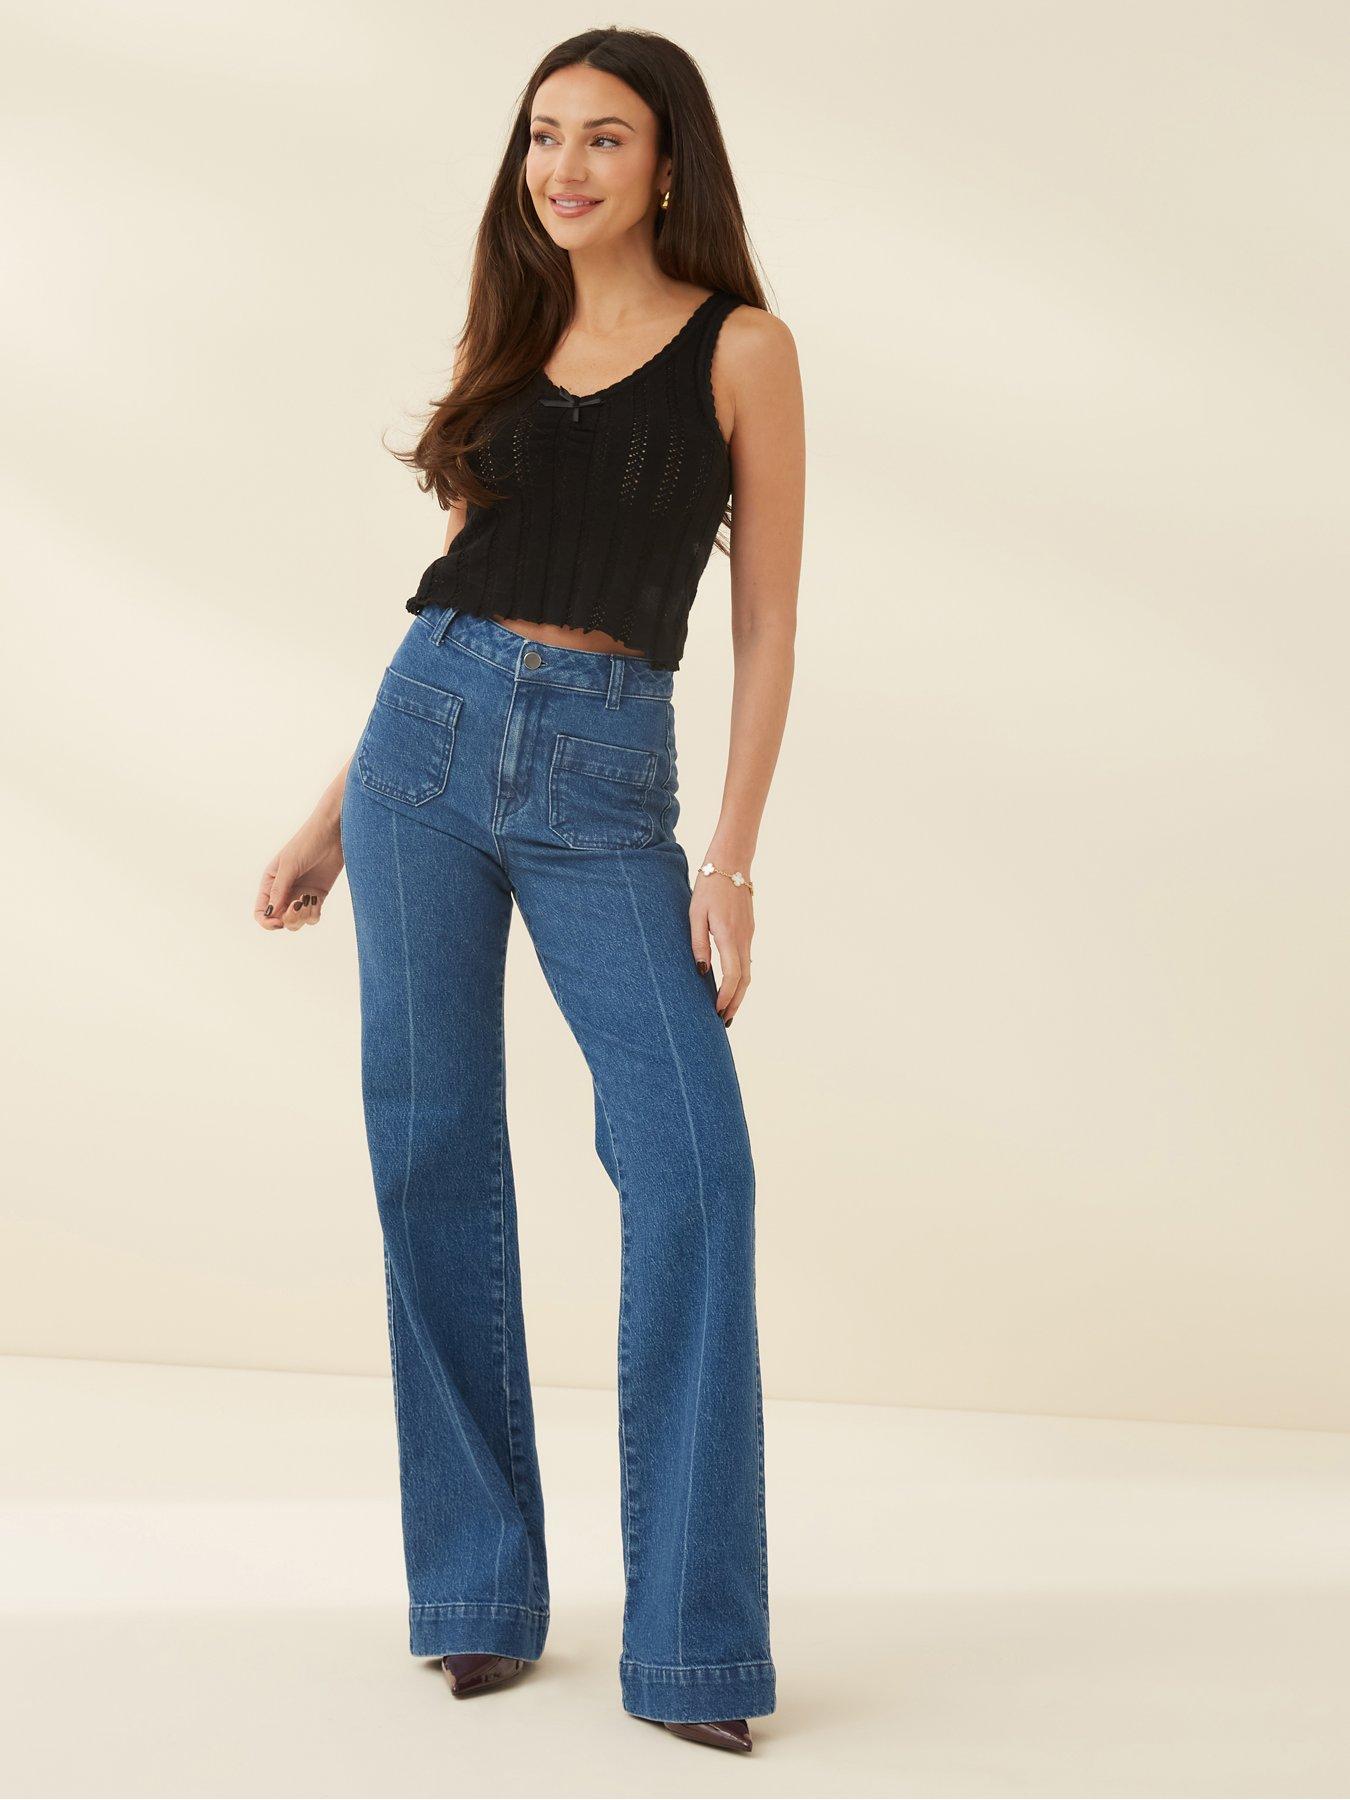 Four Buttons Super High Waist Slim Jeans – MISS SIXTY